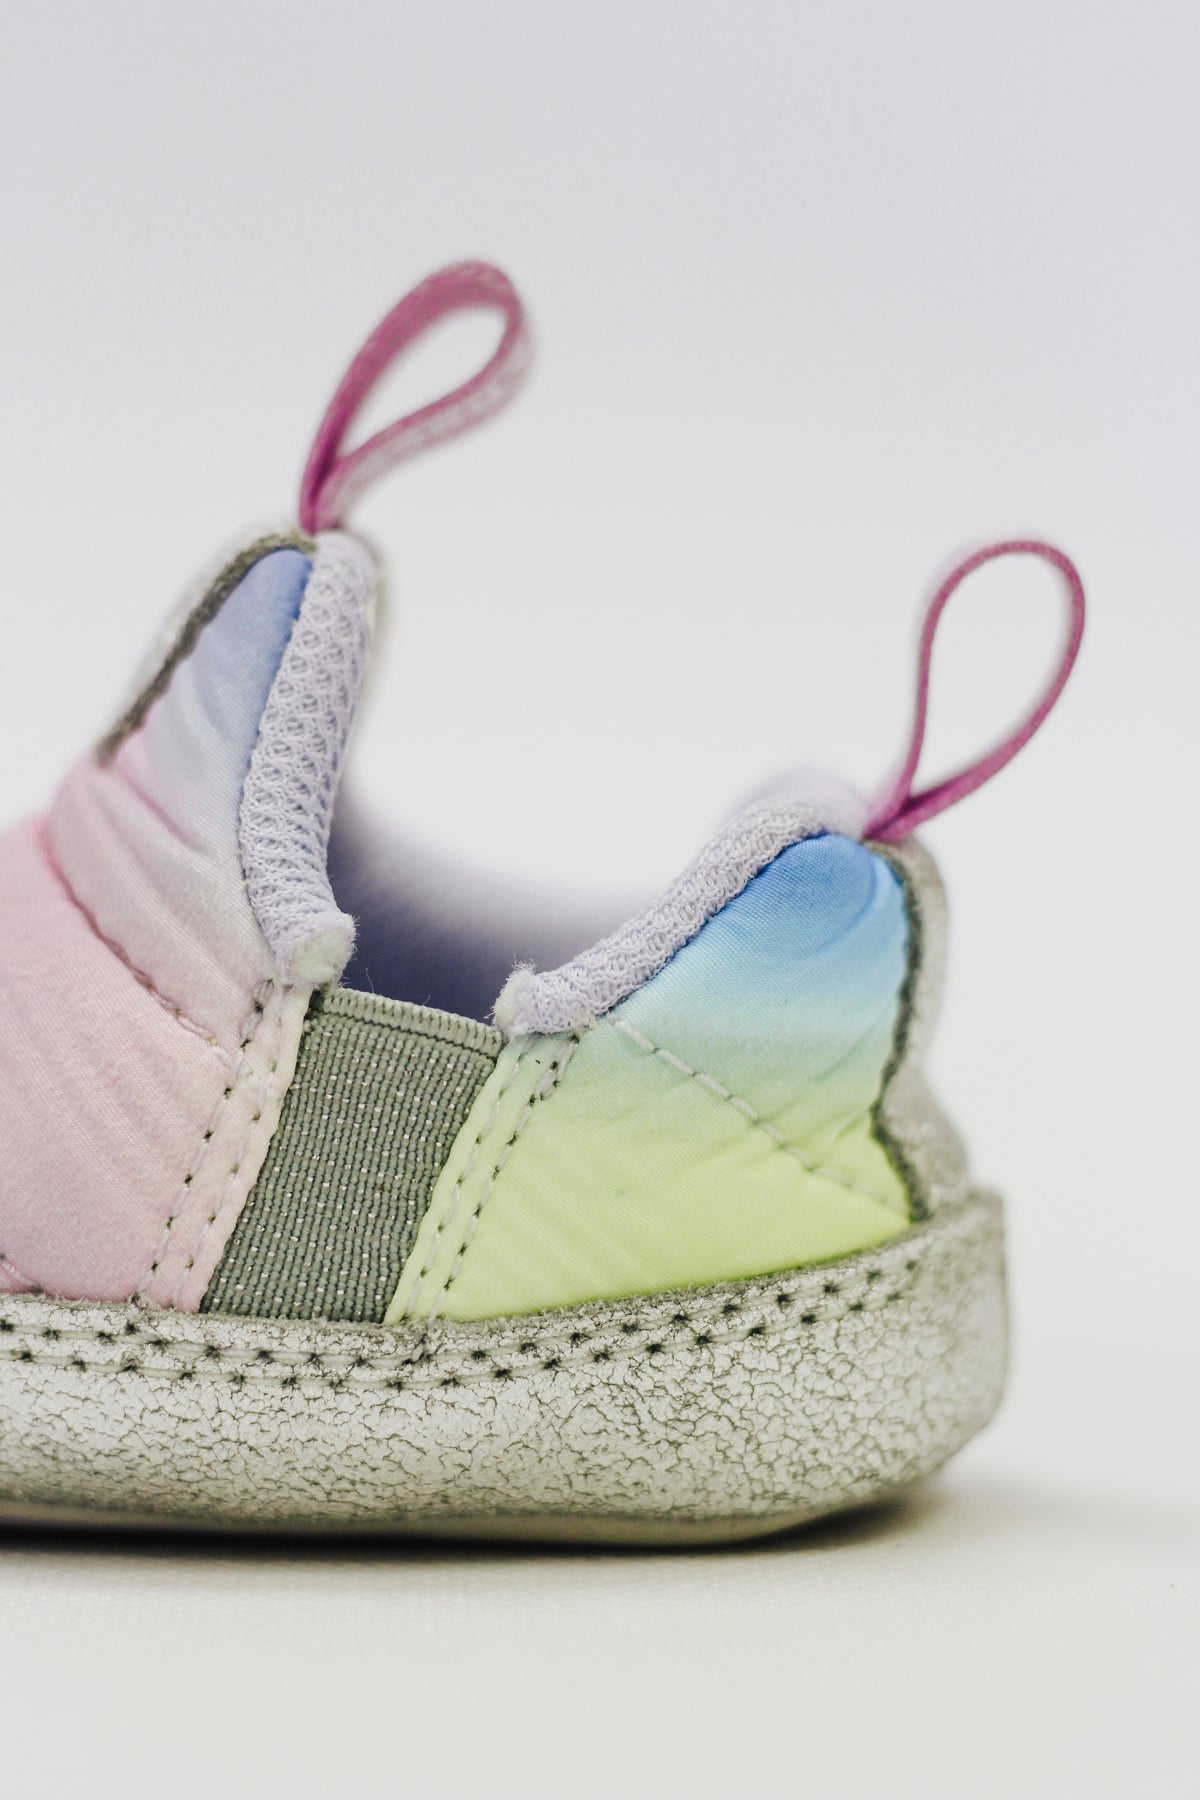 Rocky Multicolor Pink Infant Shoes